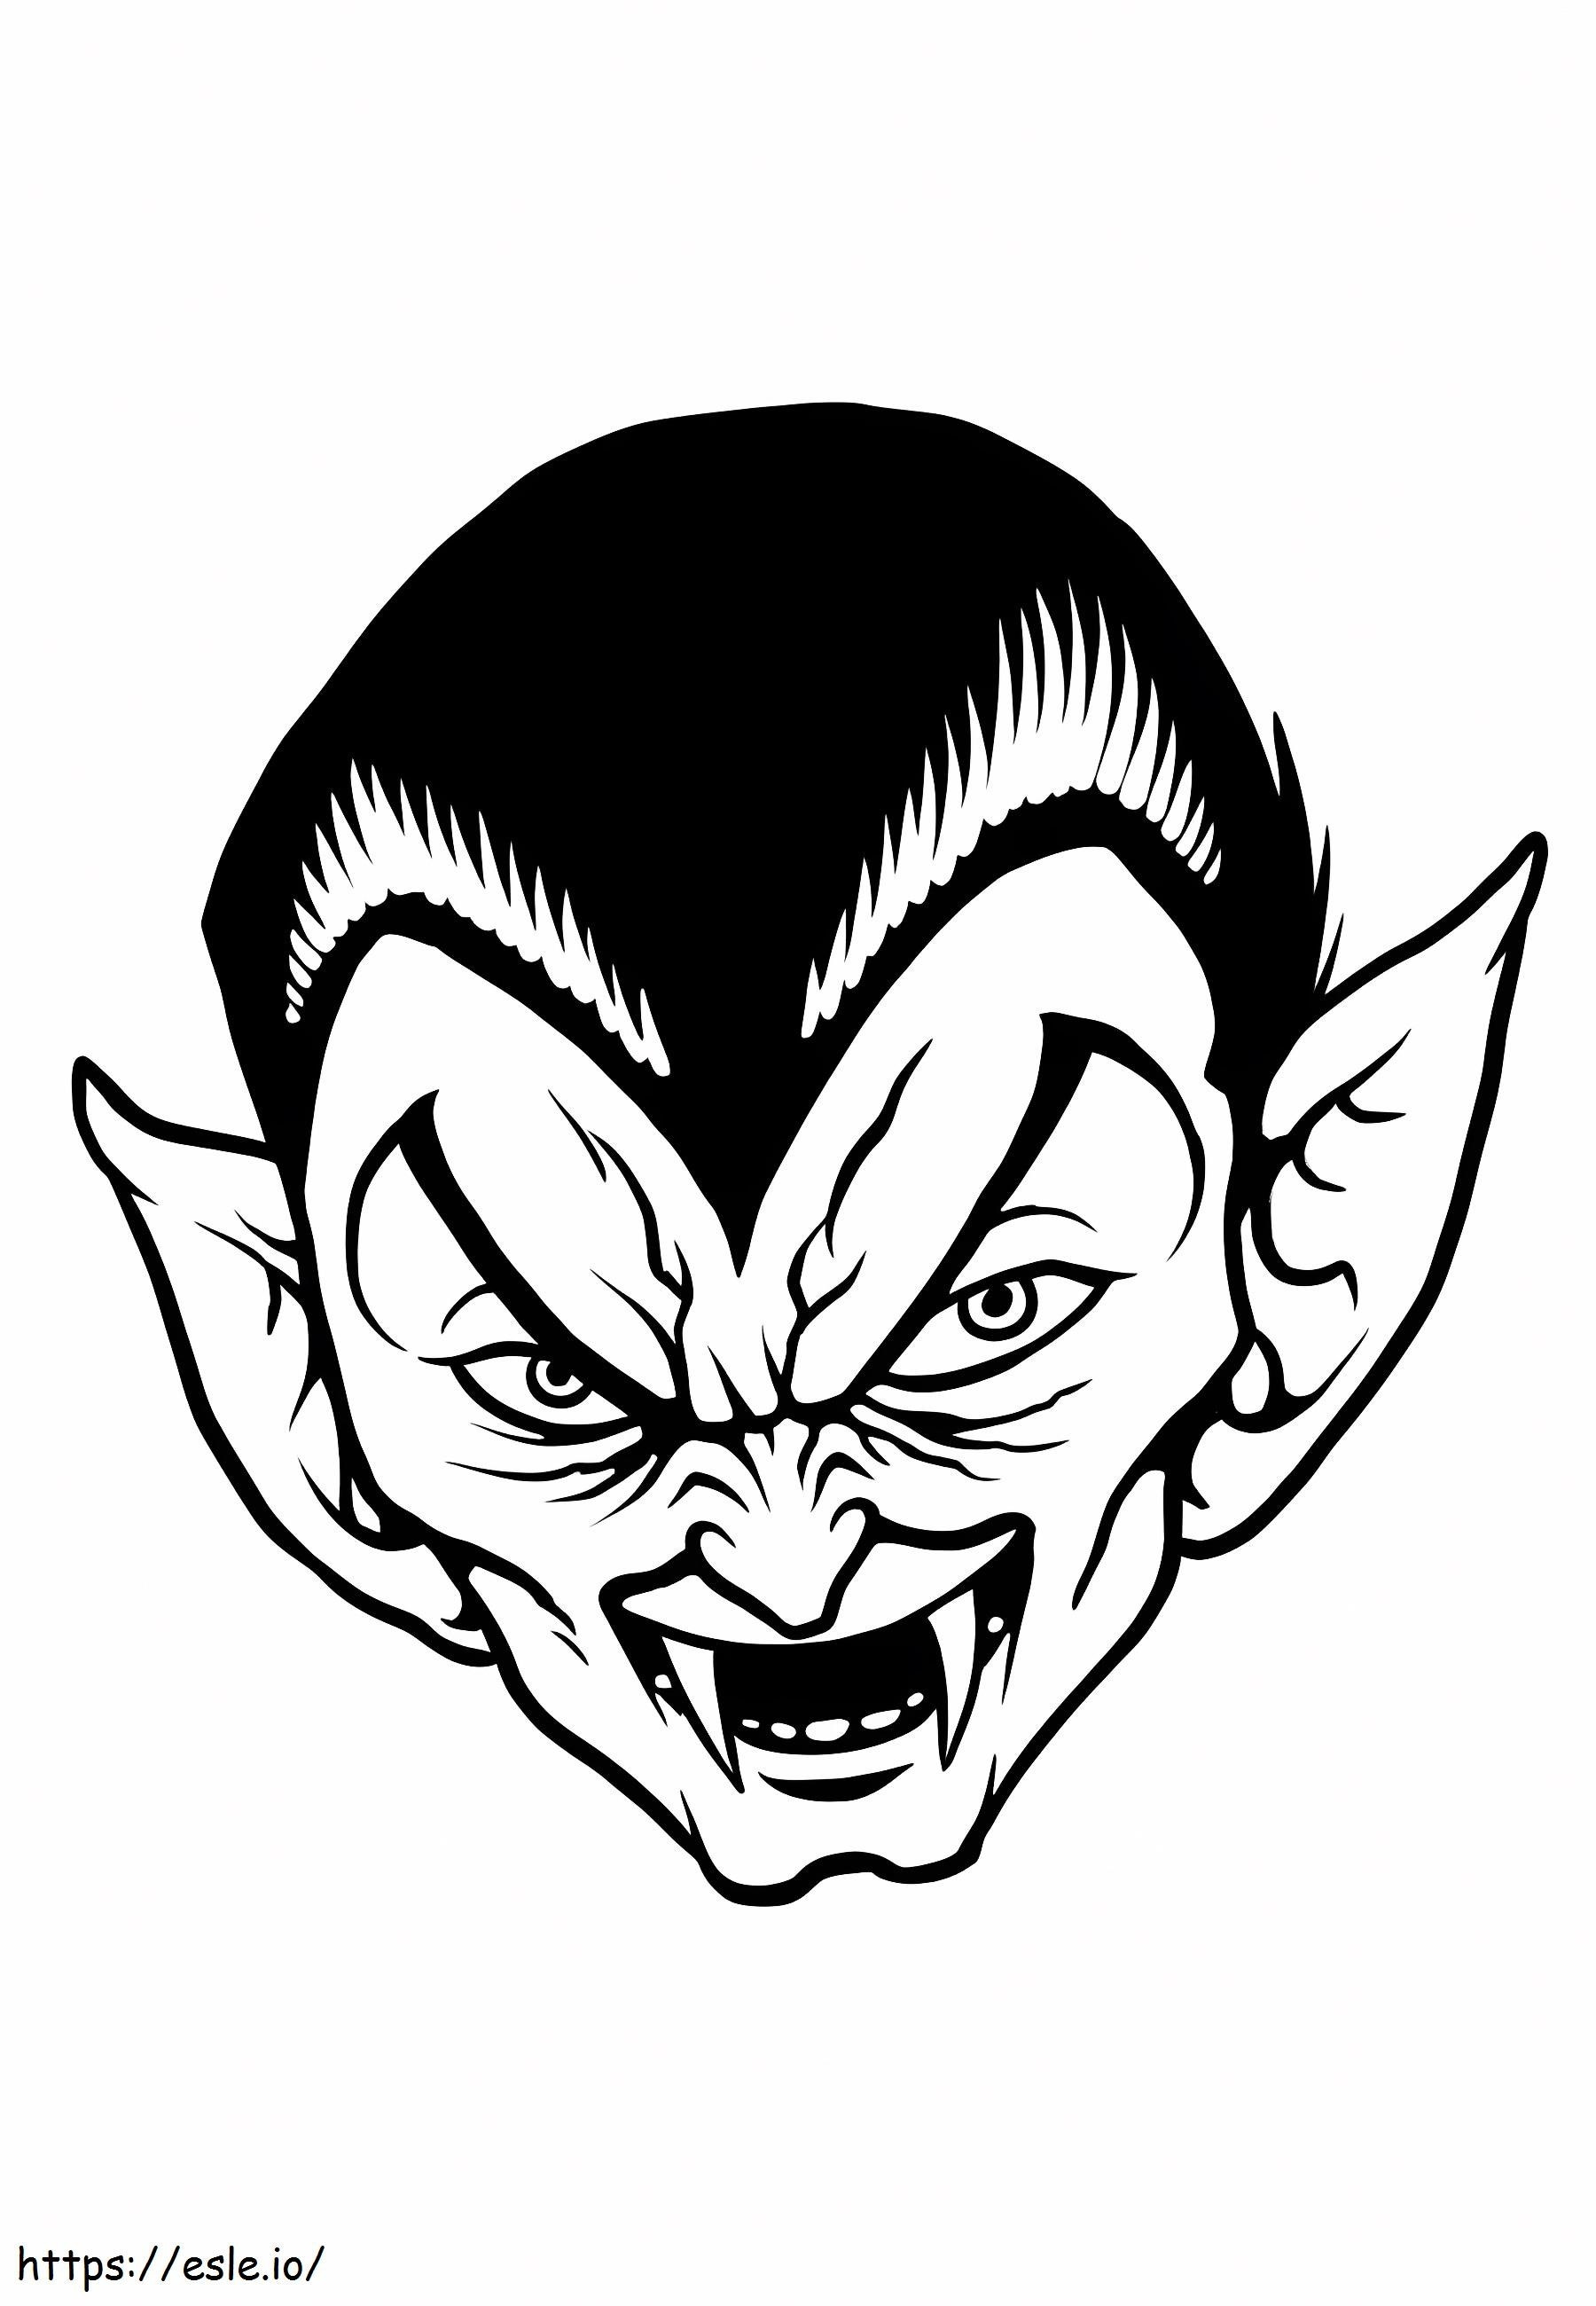 Gruseliger Dracula-Kopf ausmalbilder